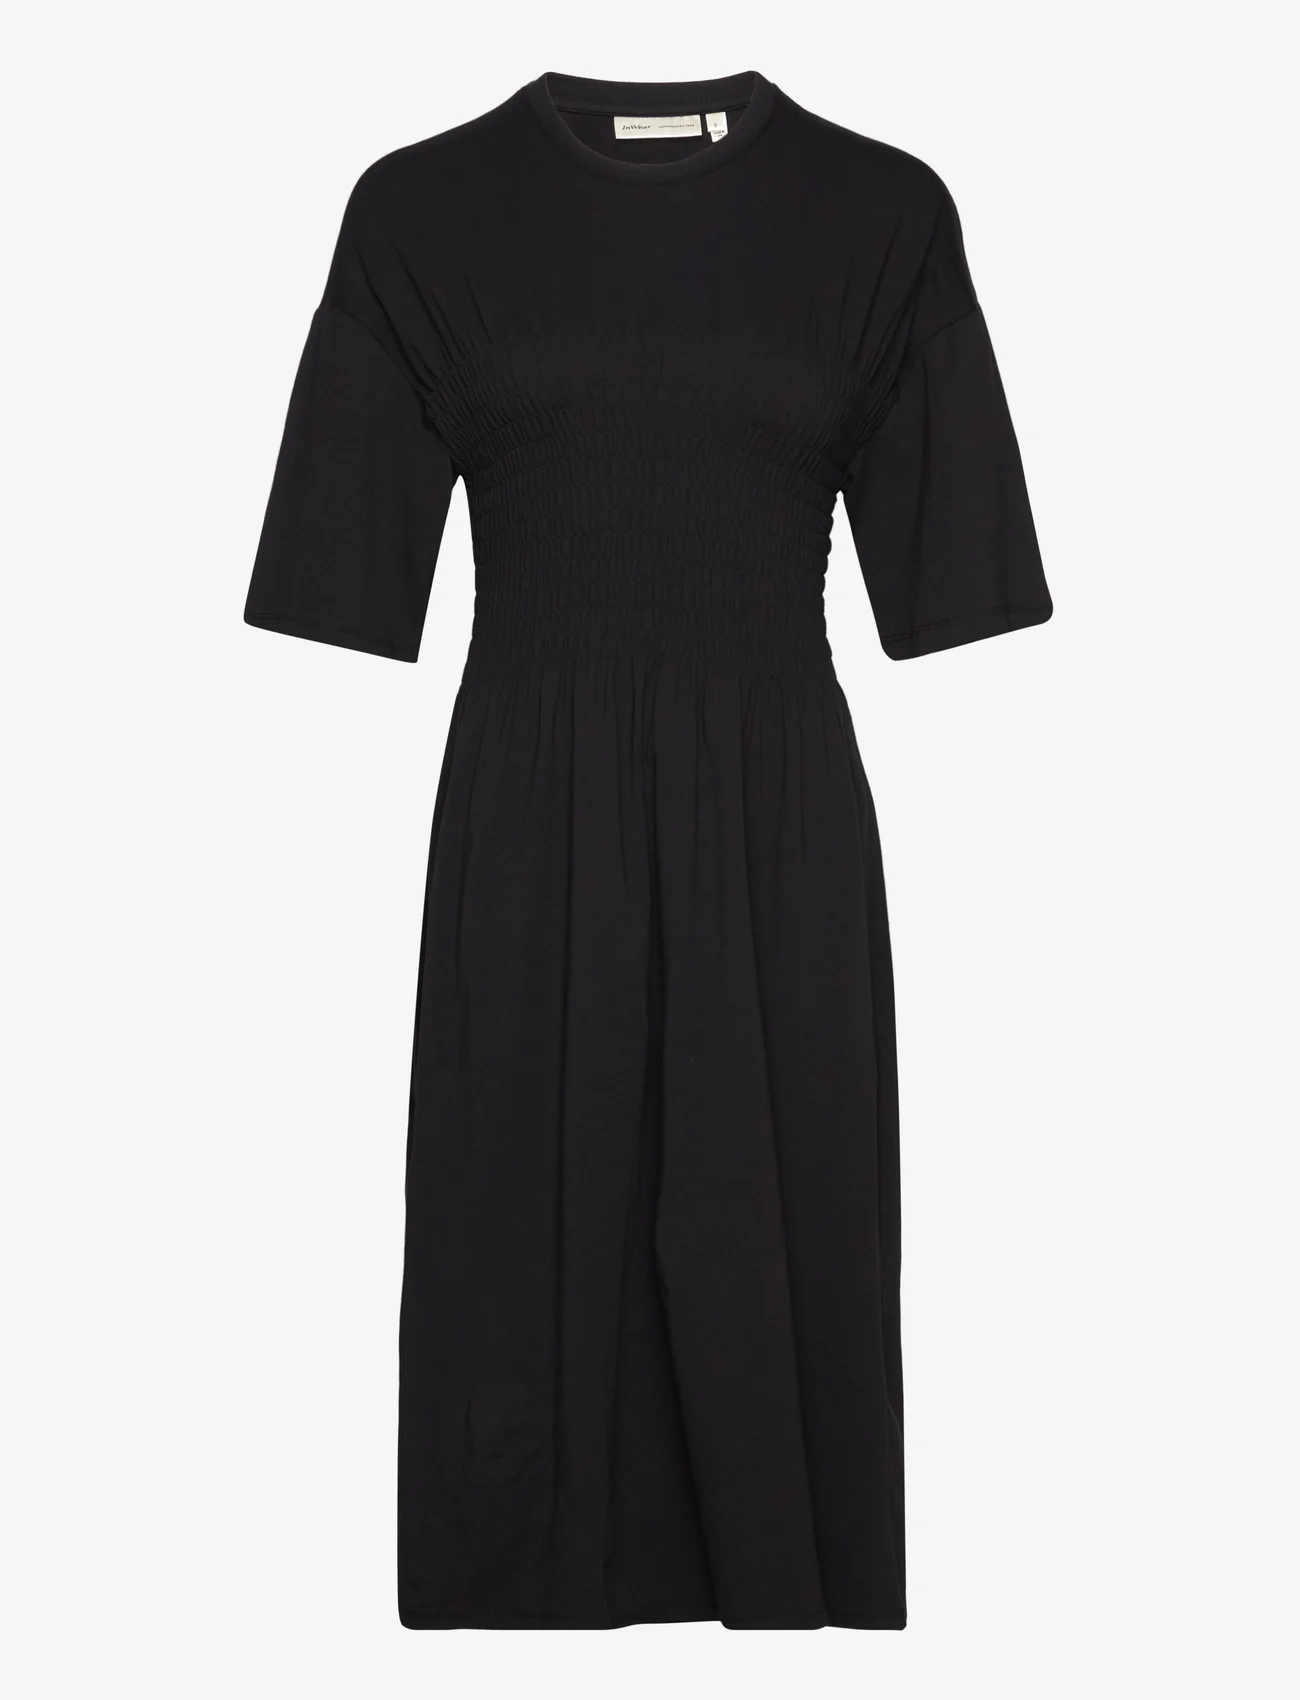 InWear - KaiusIW Dress - sukienki letnie - black - 0